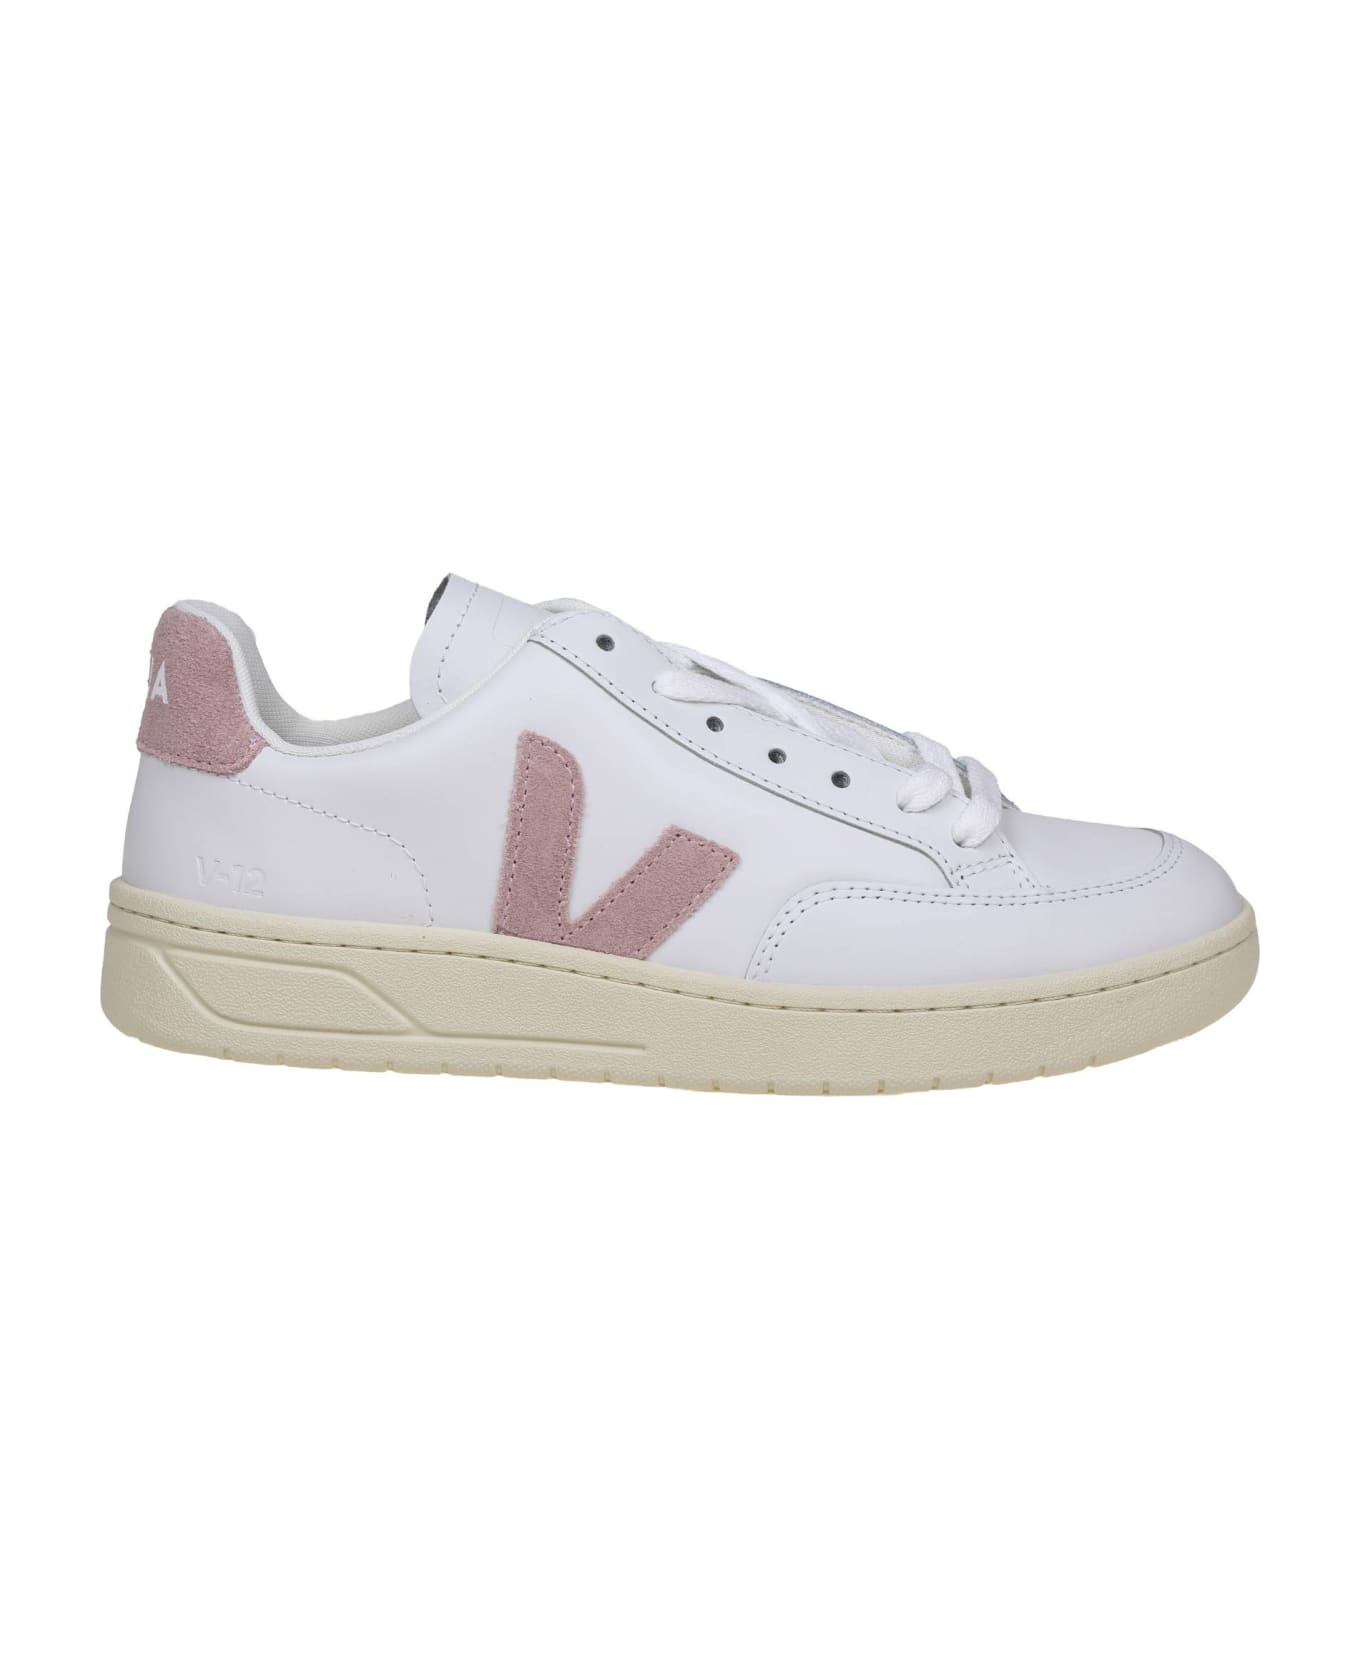 Veja V 12 Sneakers In White/pink Leather - White/Rose